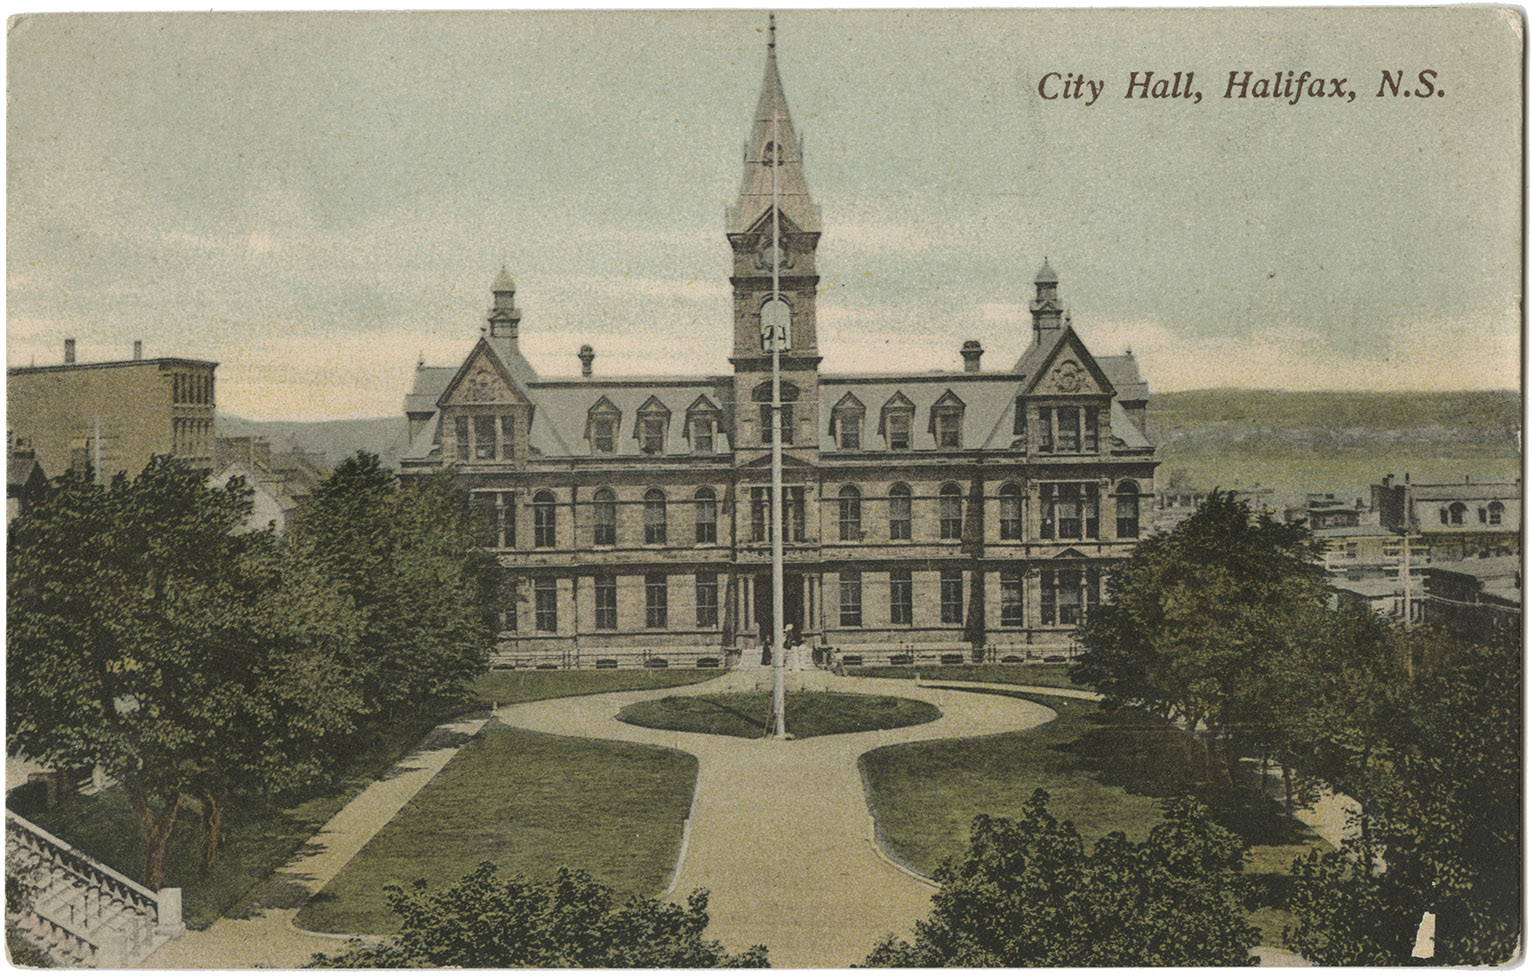 communityalbums - City Hall, Halifax N.S.